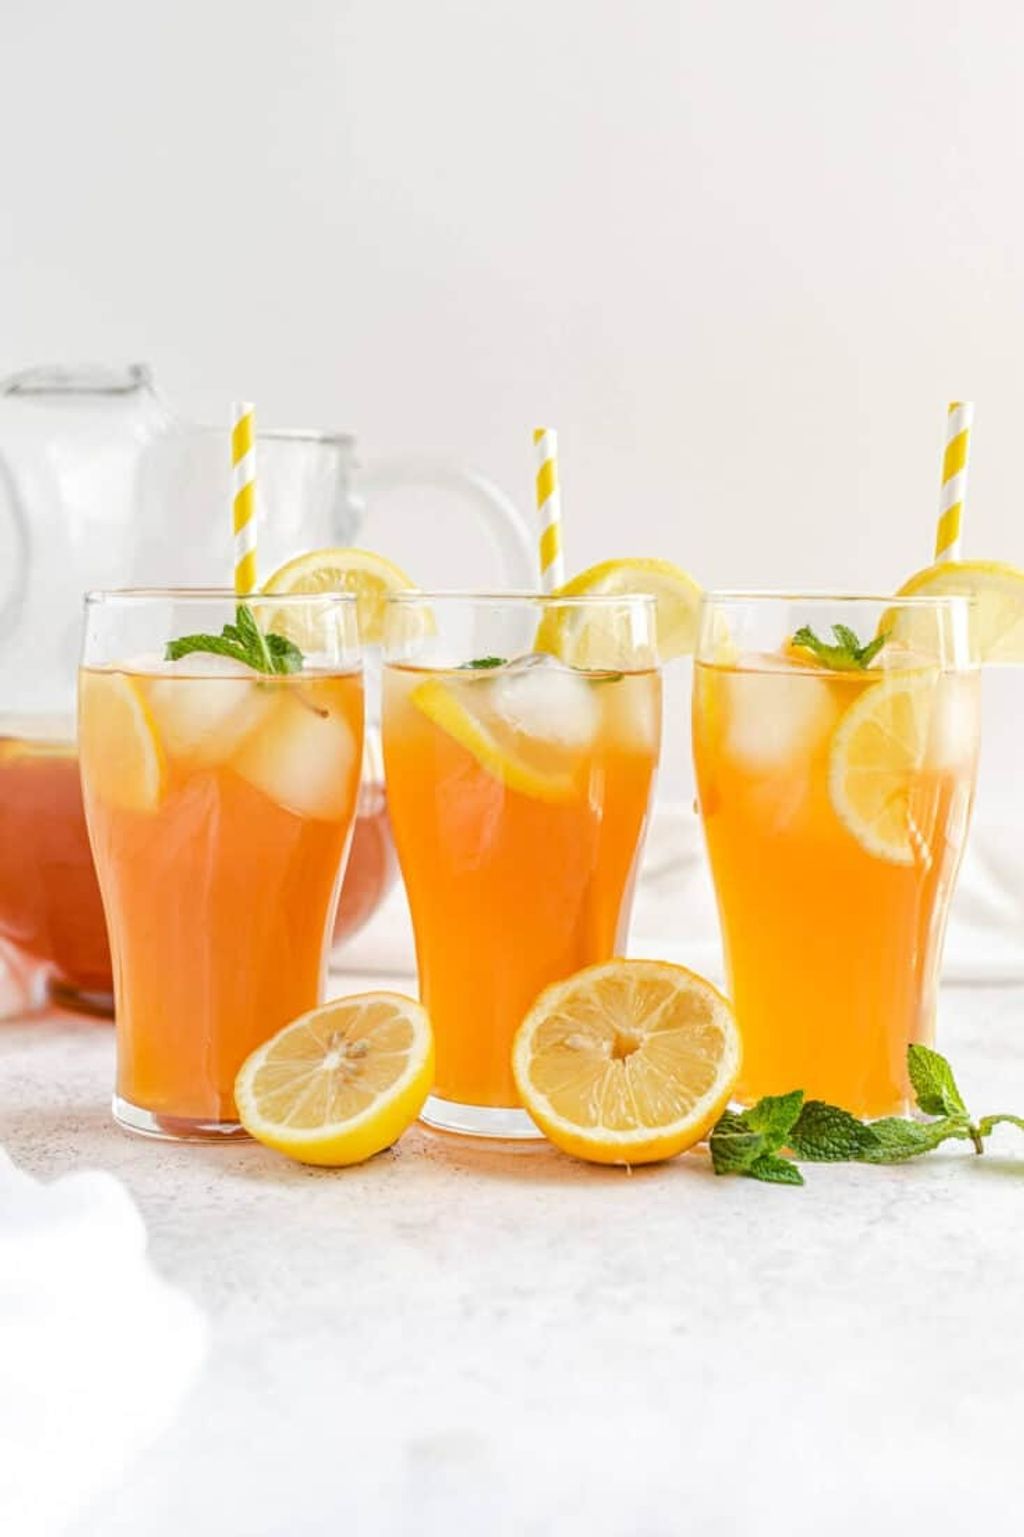 Homemade-Lemon-Iced-Tea-recipe-queensleeappetit.com-5-735x1103